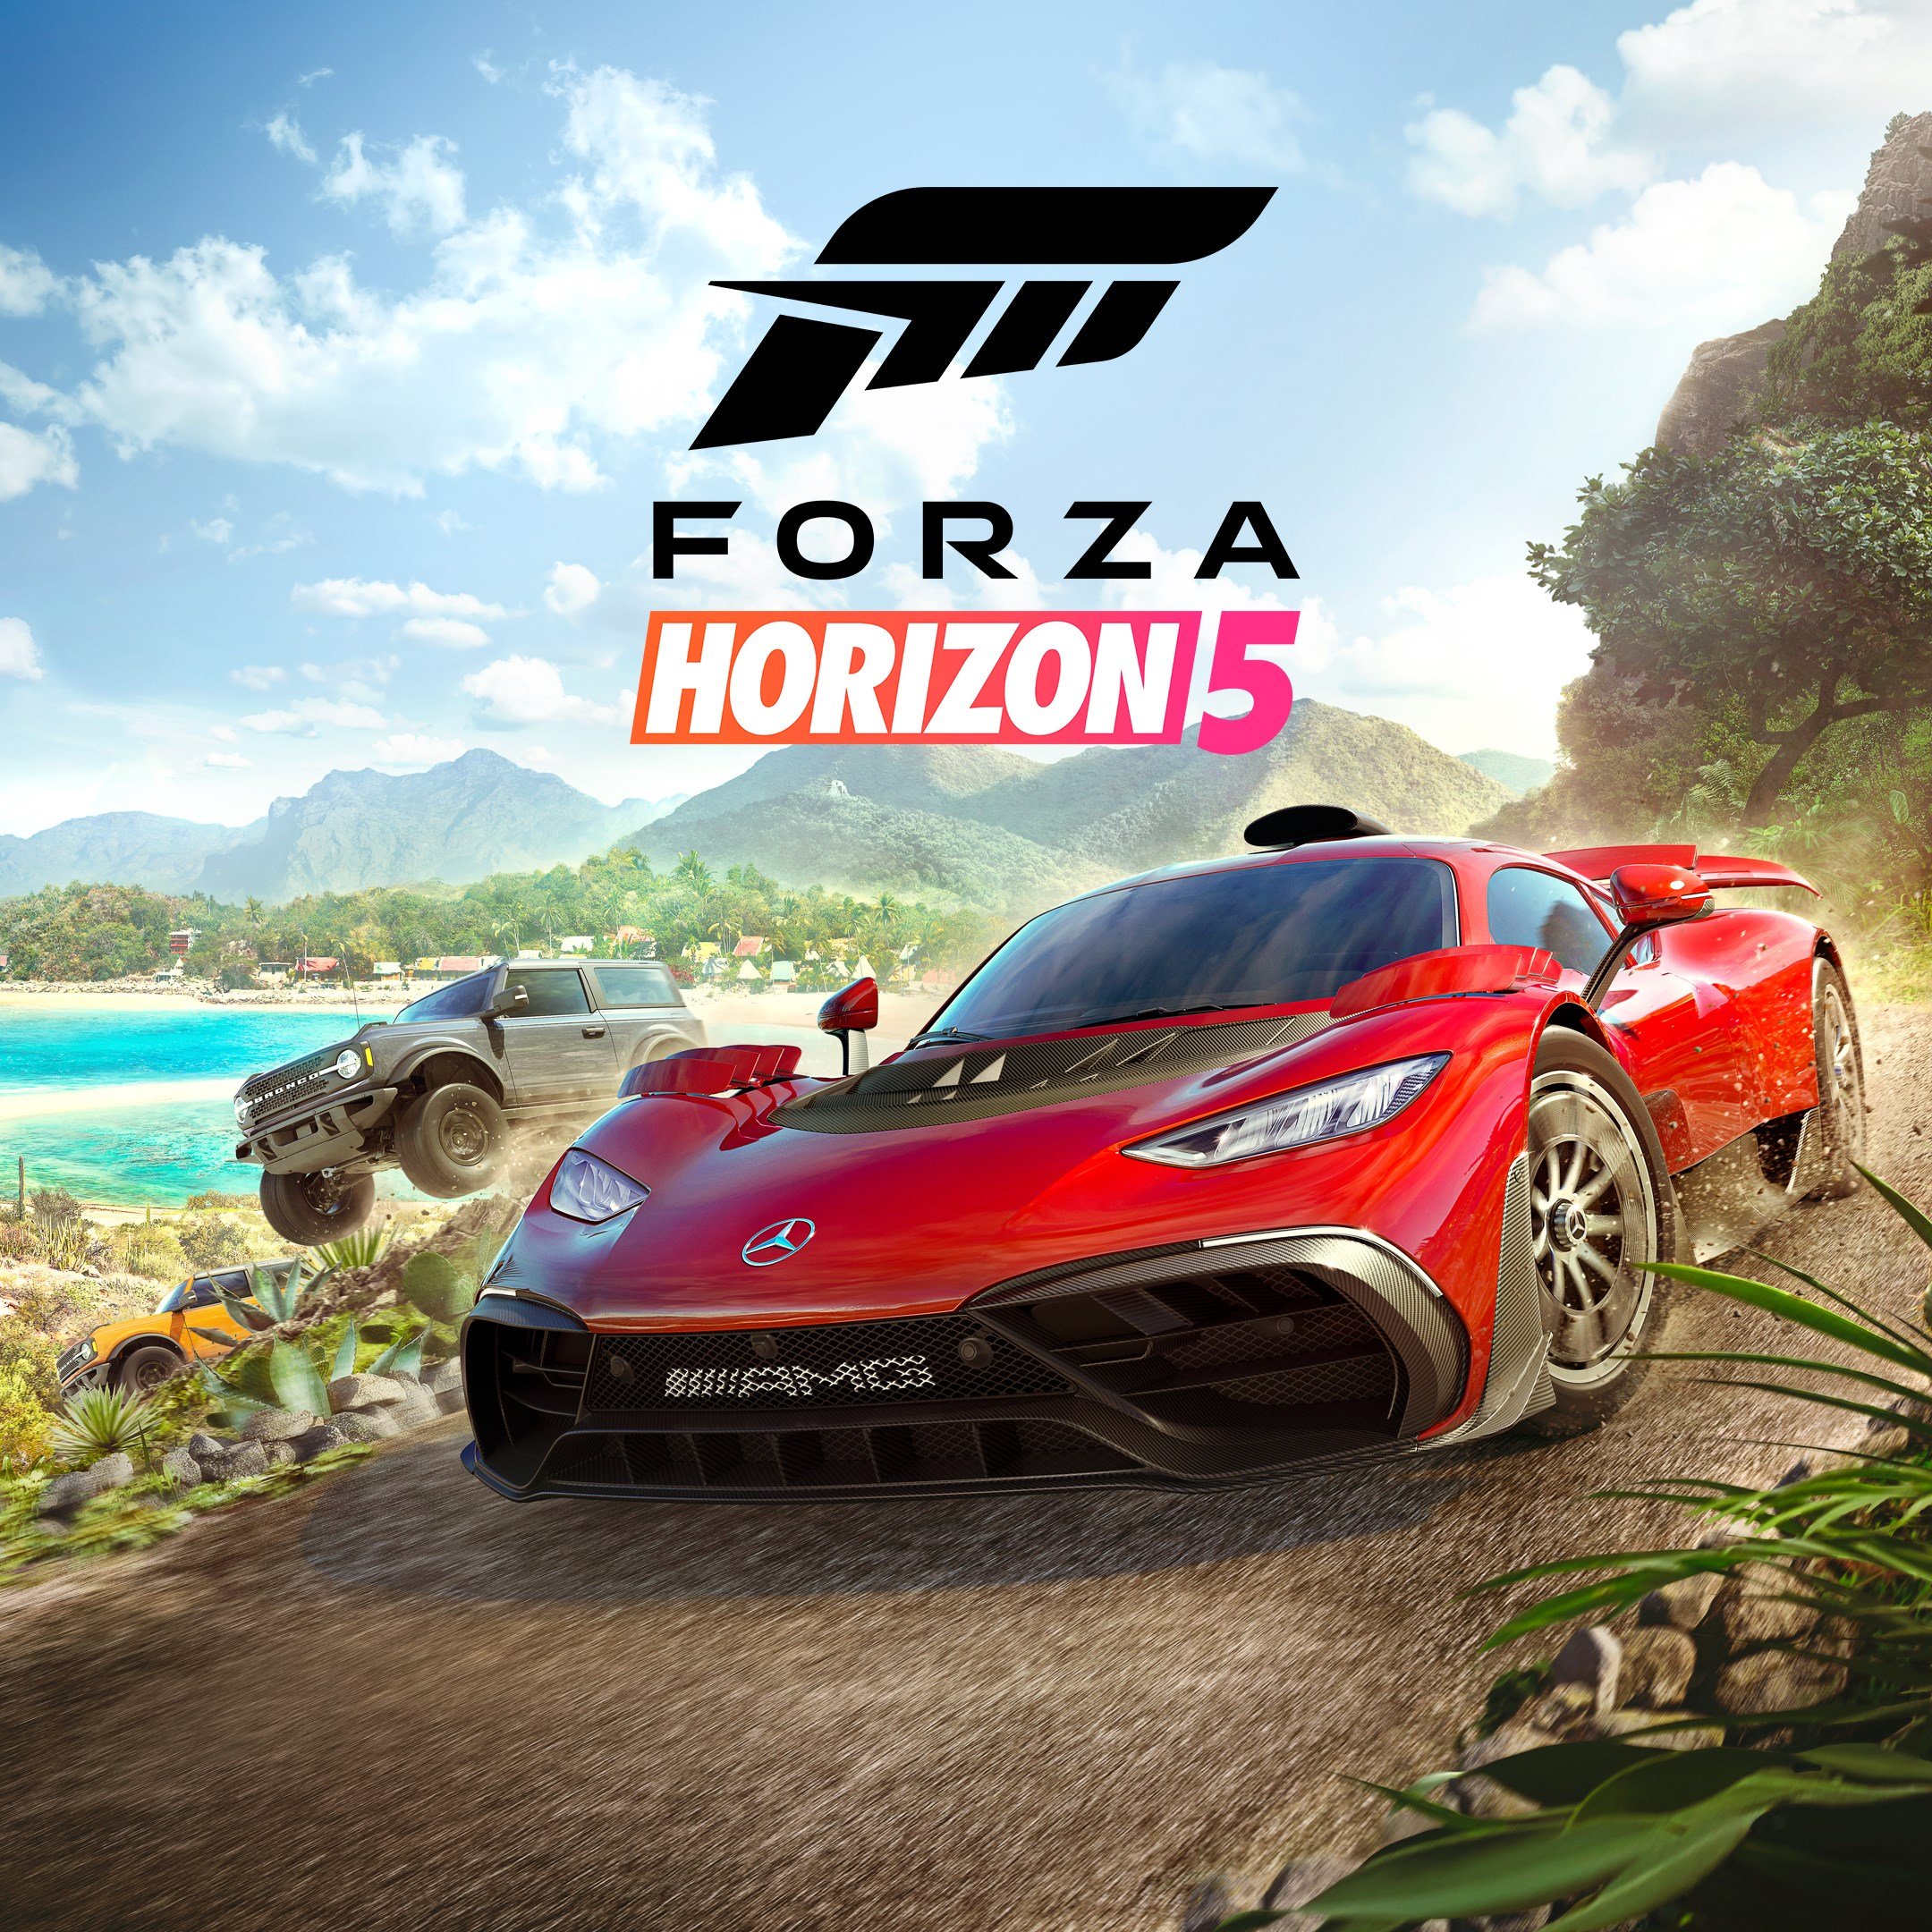 Boxart for Forza Horizon 5